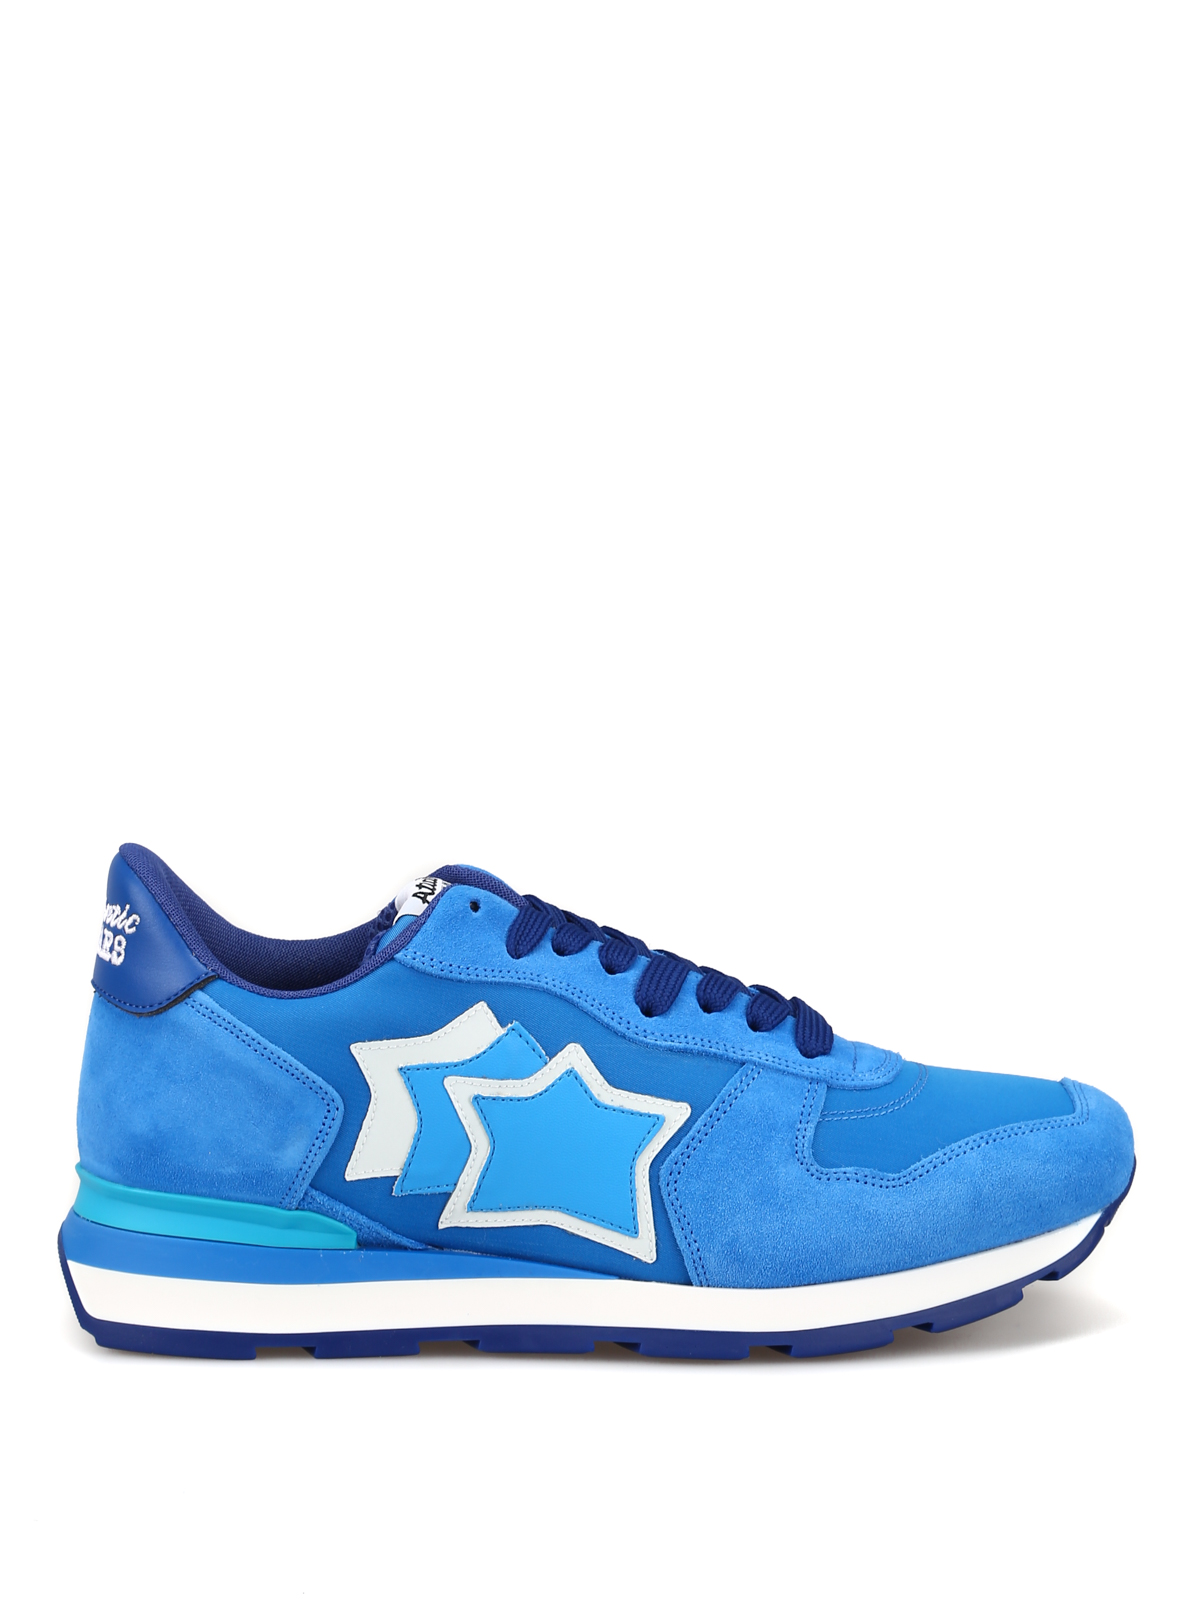 Trainers Atlantic Stars - Antares light blue sneakers 